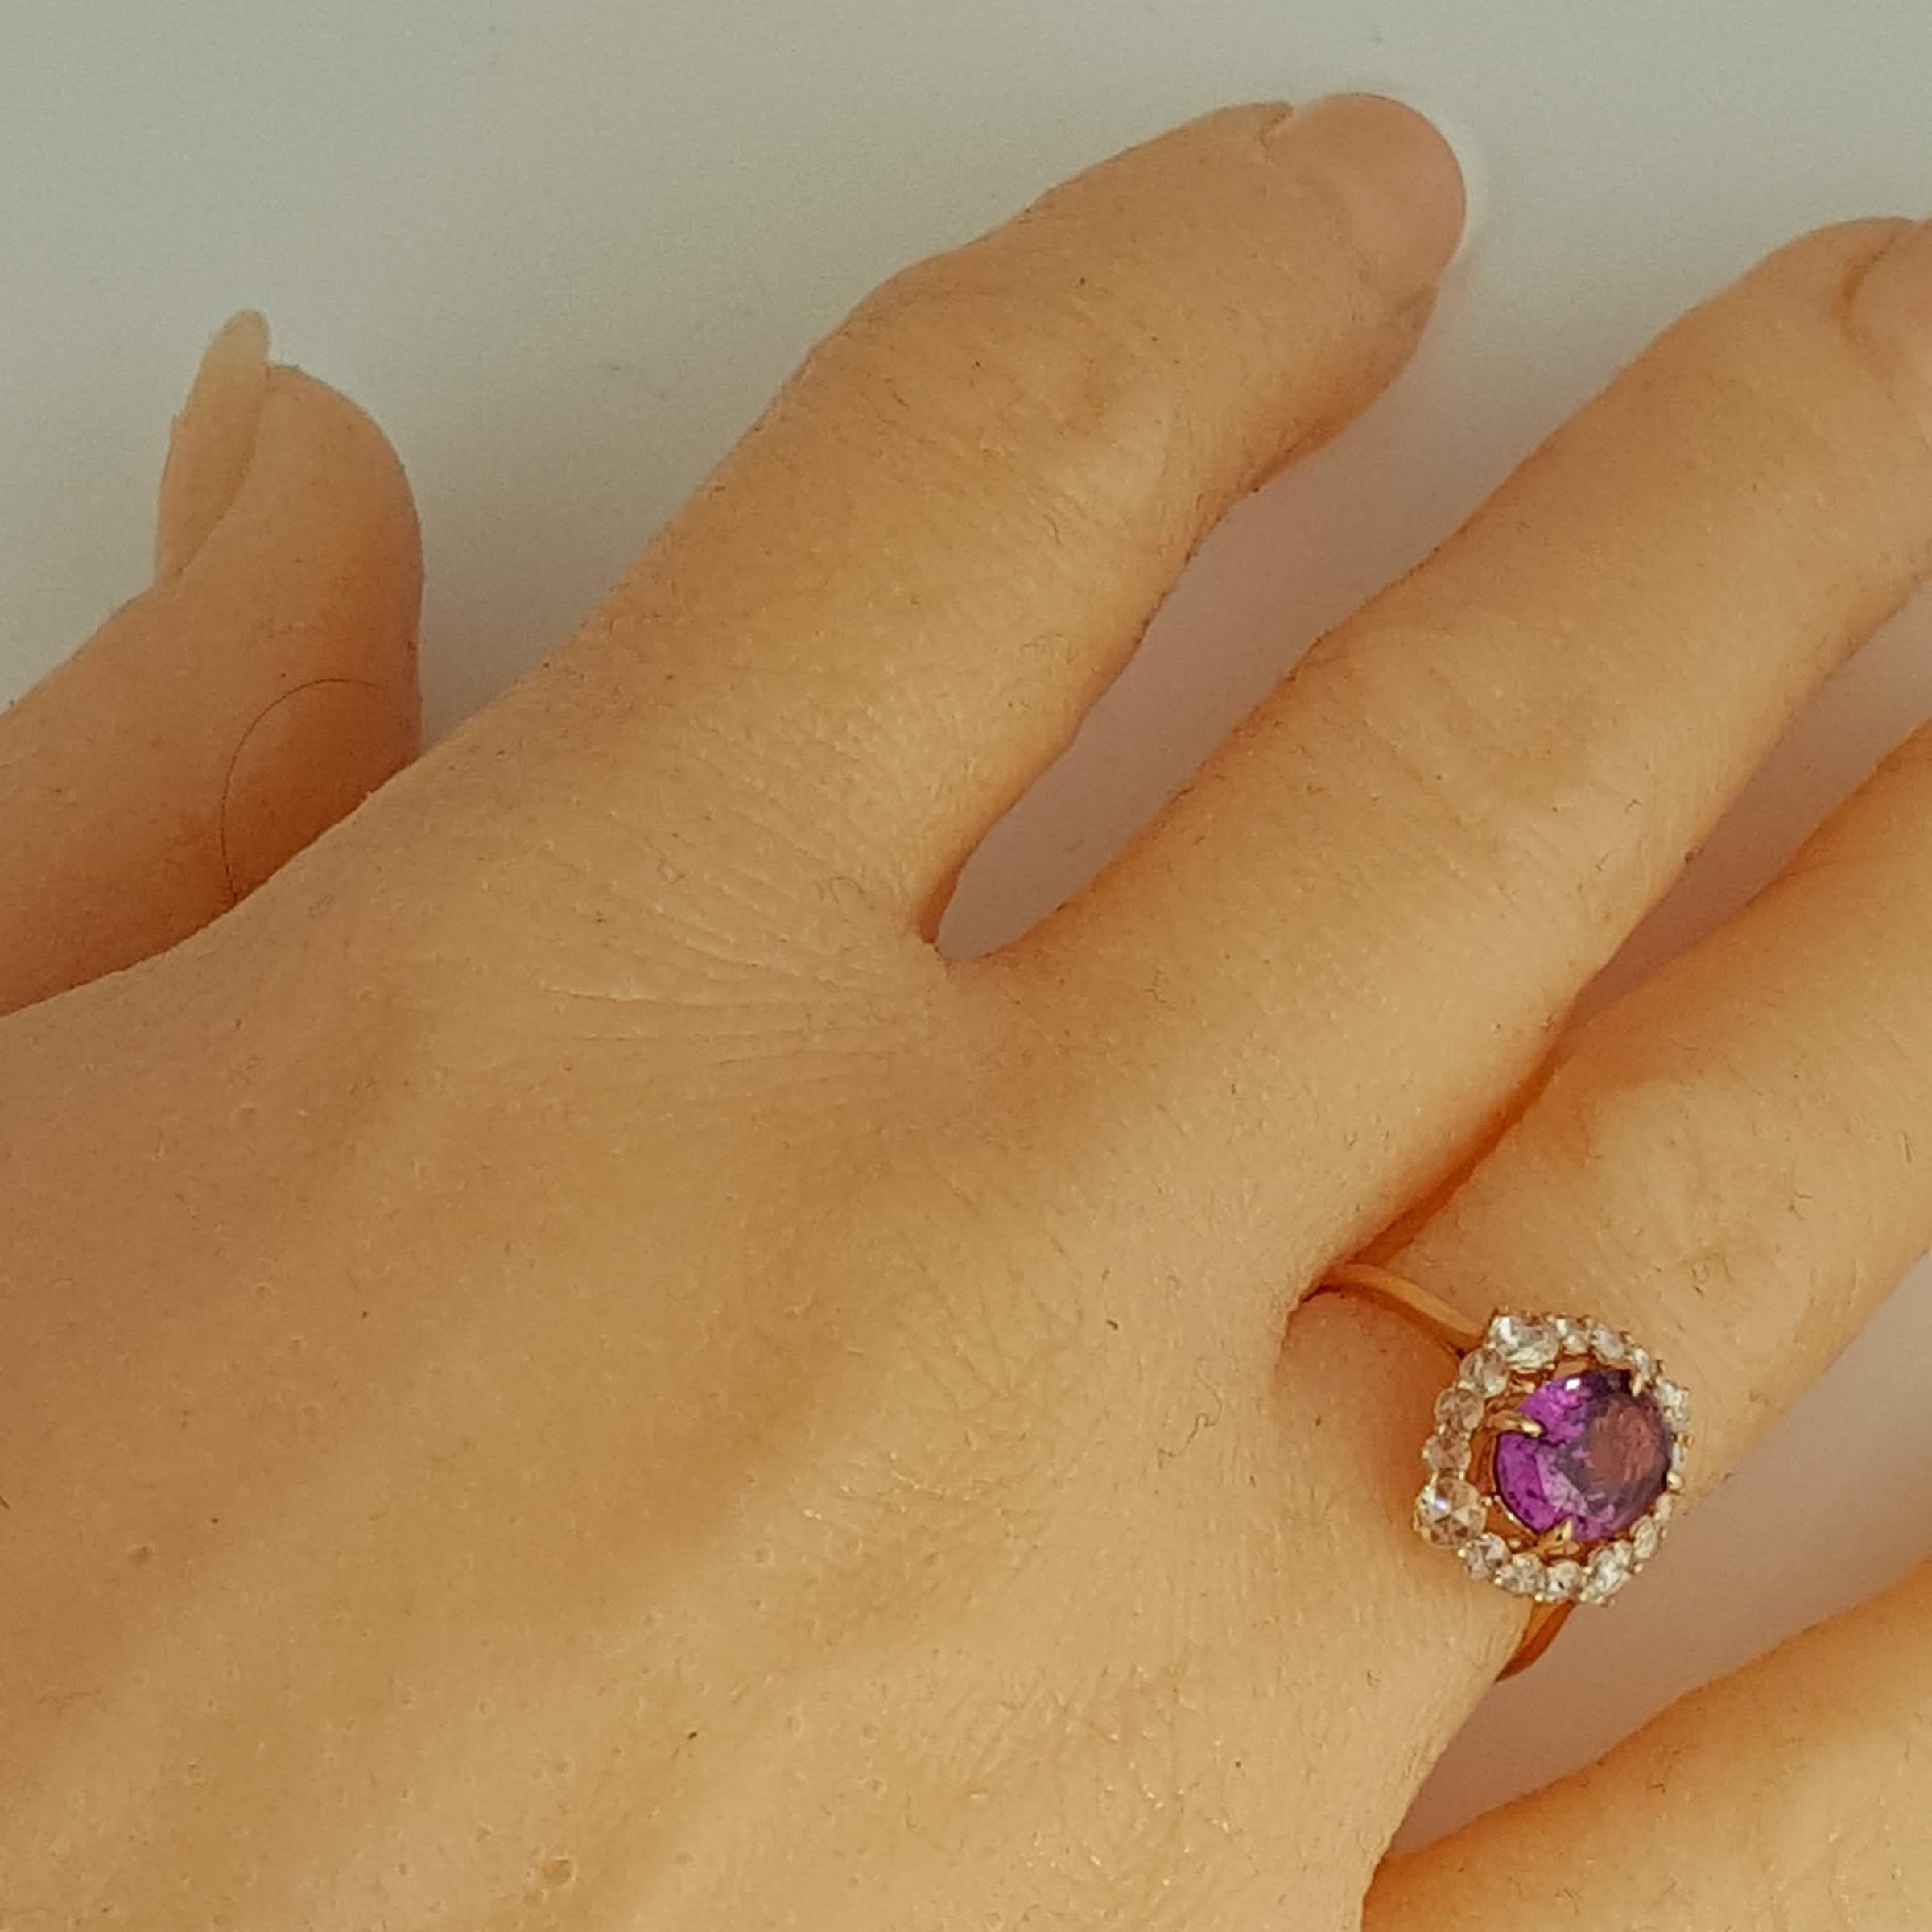 Women's GIA Certified 2.48 Carat Oval Cut Purple-Pink Sapphire Ring in 18k Rose Gold